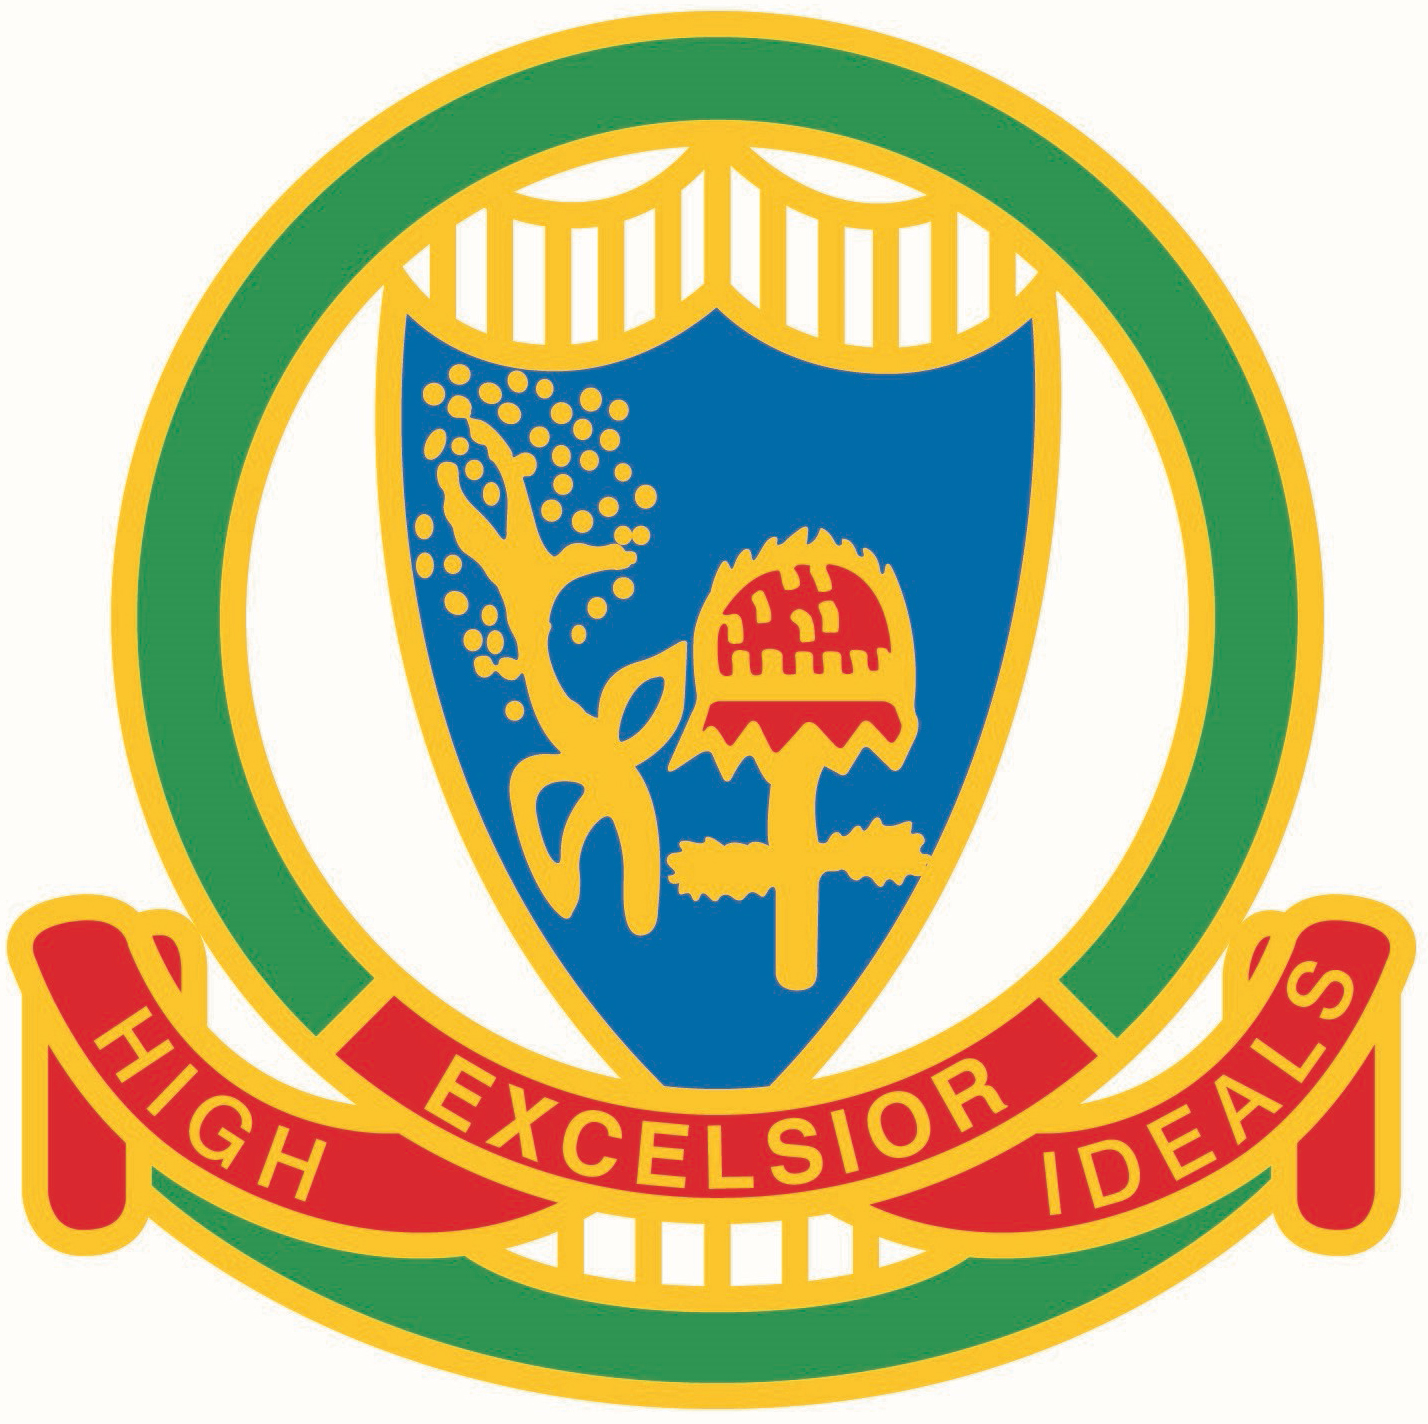 Excelsior Public School (NSW)